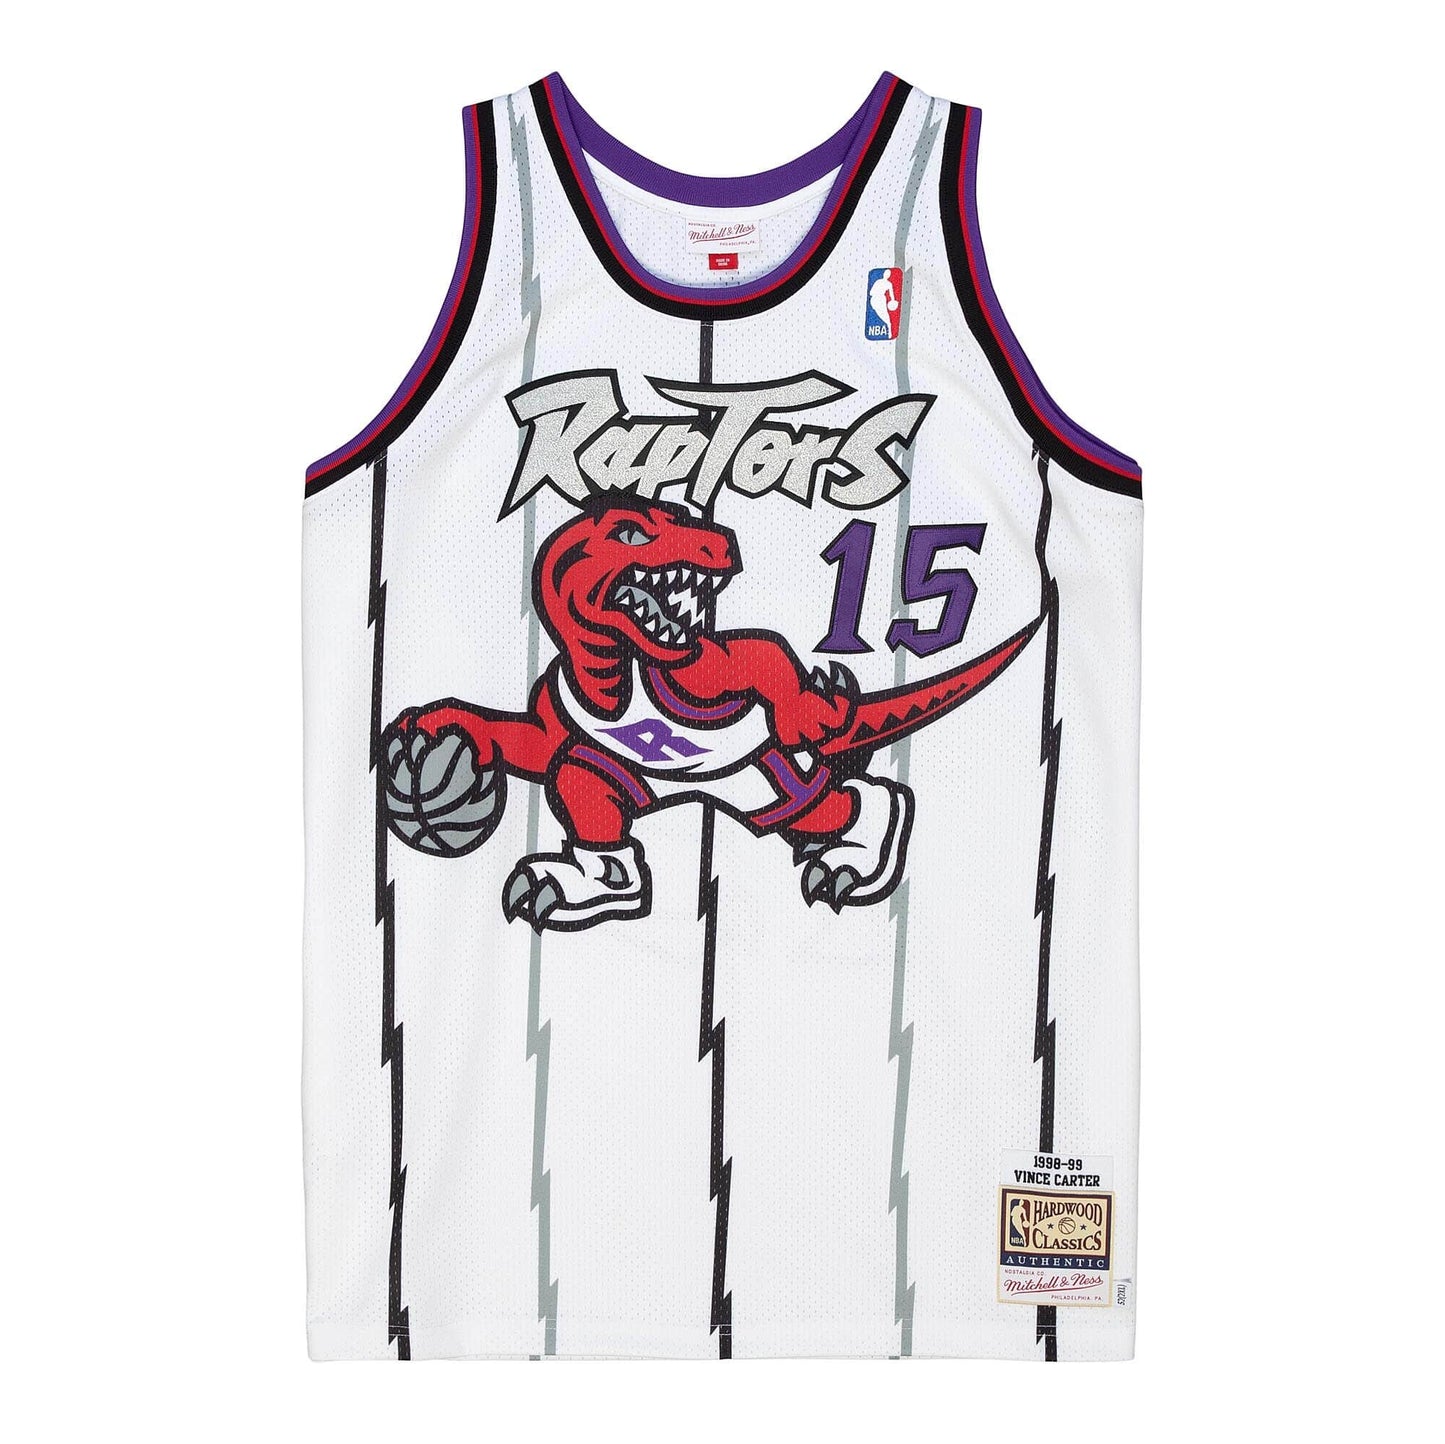 Authentic Jersey Toronto Raptors 1998-99 Vince Carter